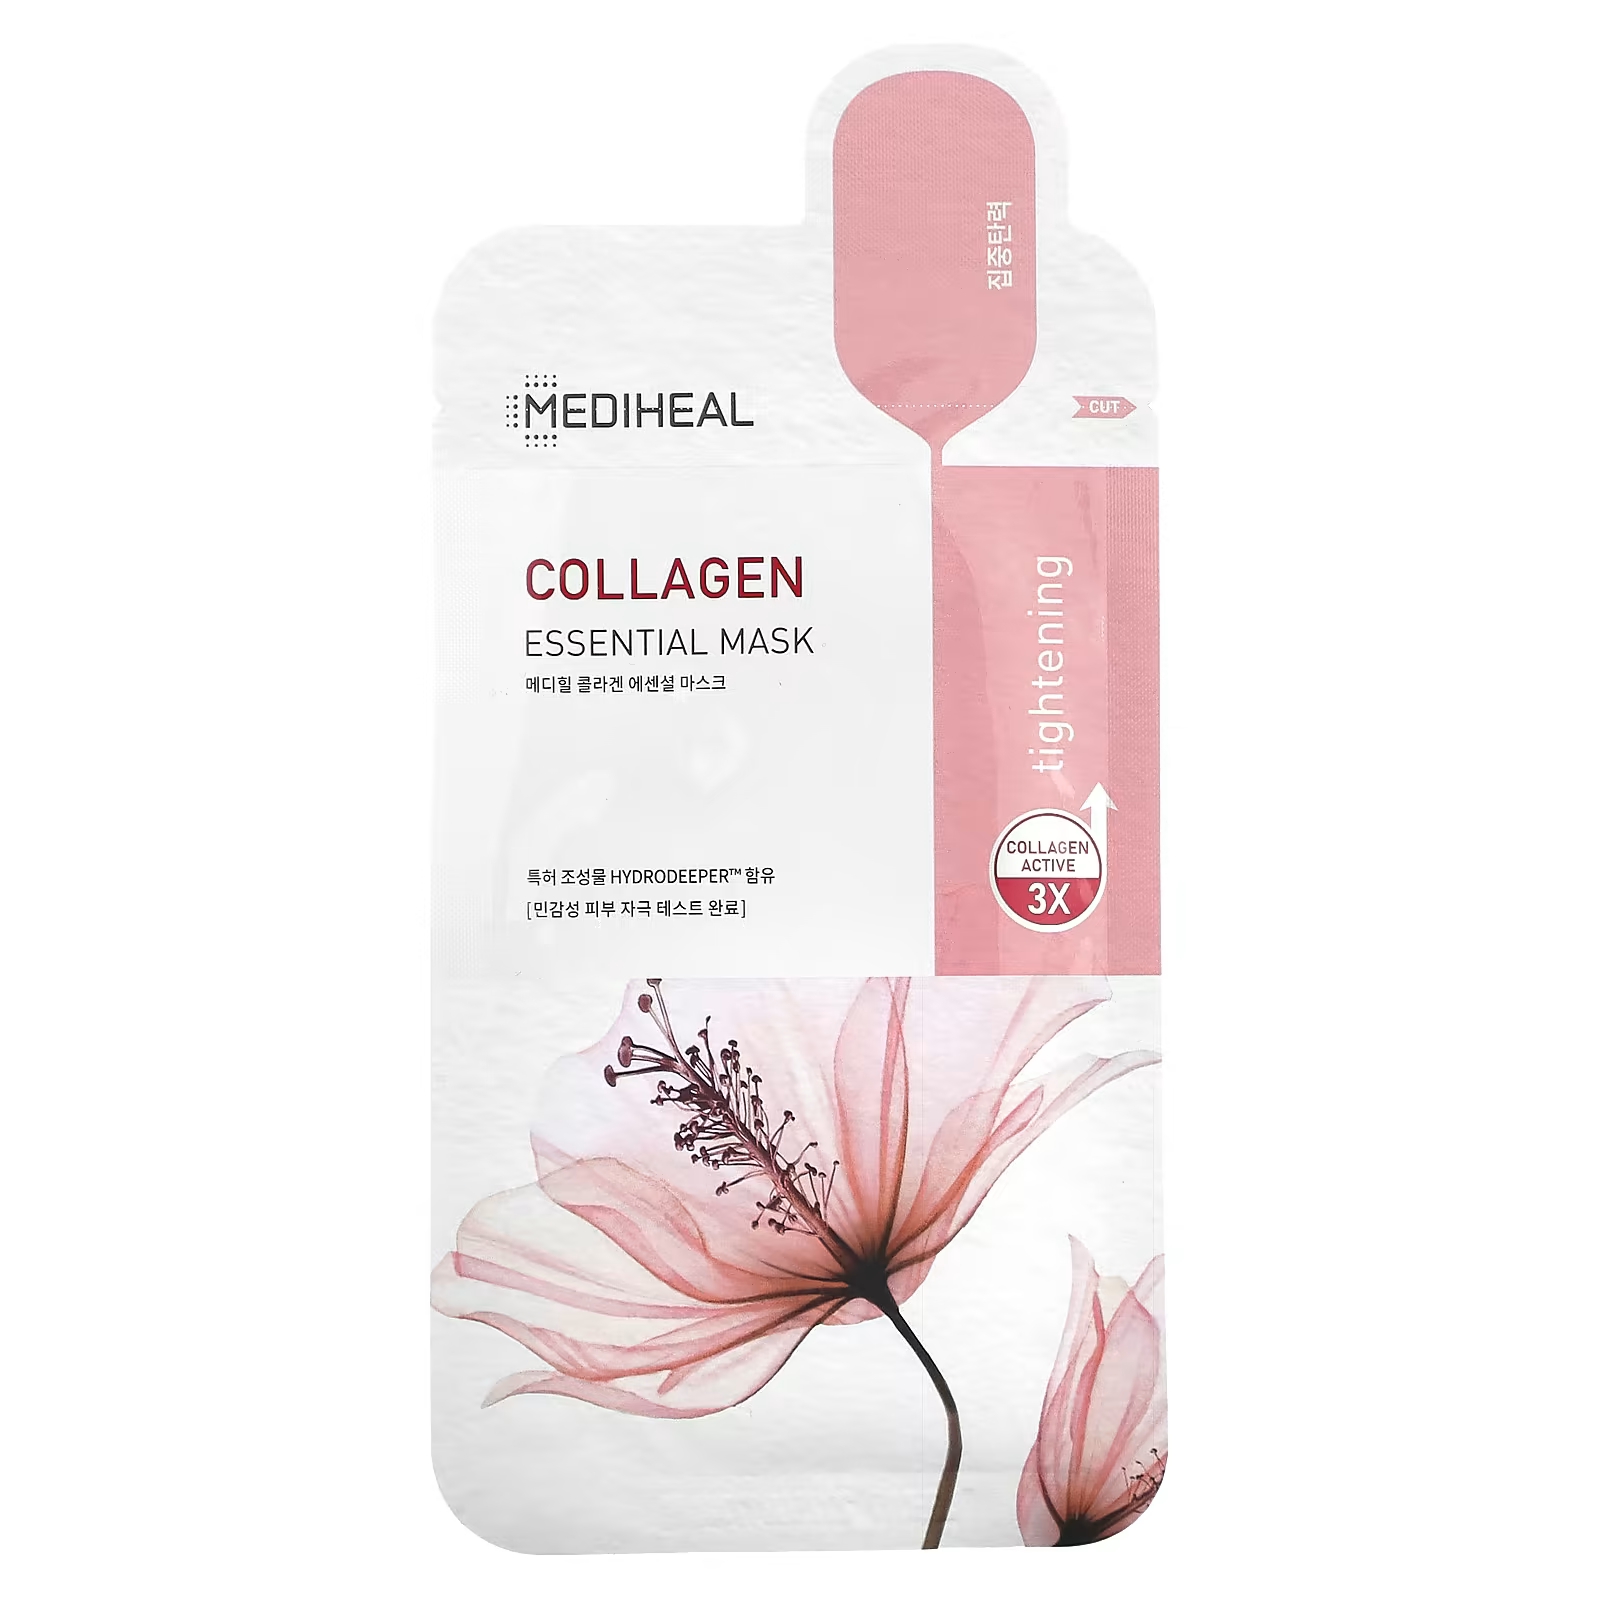 MEDIHEAL Collagen Essential Beauty Mask, 1 лист, 0,81 жидк. унции (24 мл) mediheal the nmf ampoule beauty mask 1 шт 27 мл 0 91 жидк унции